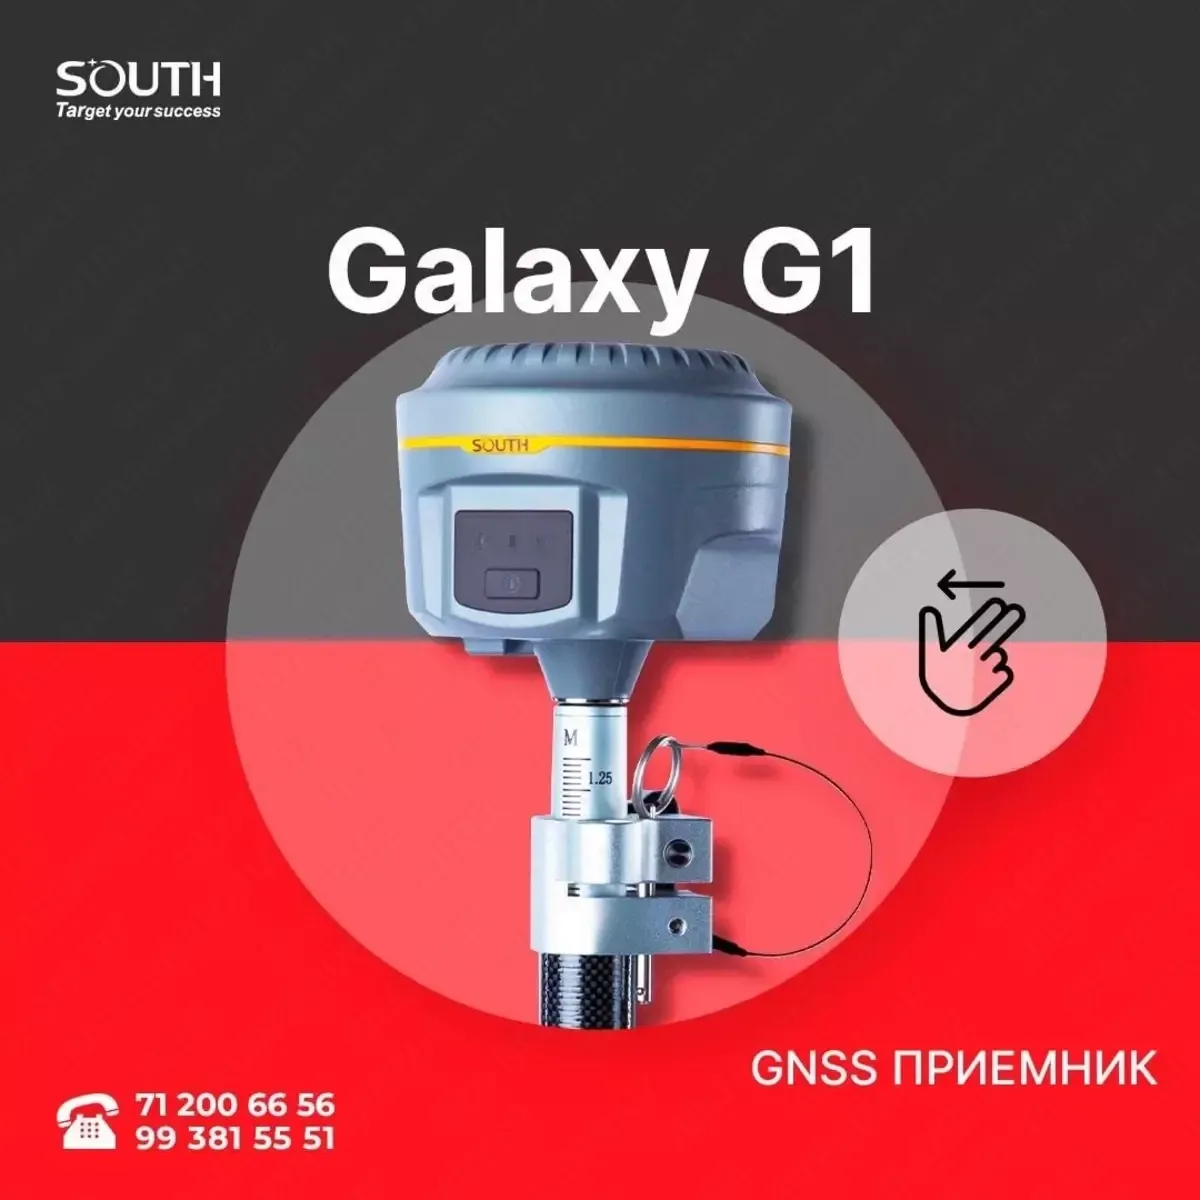 GNSS приемник SOUTH GALAXY G1#1